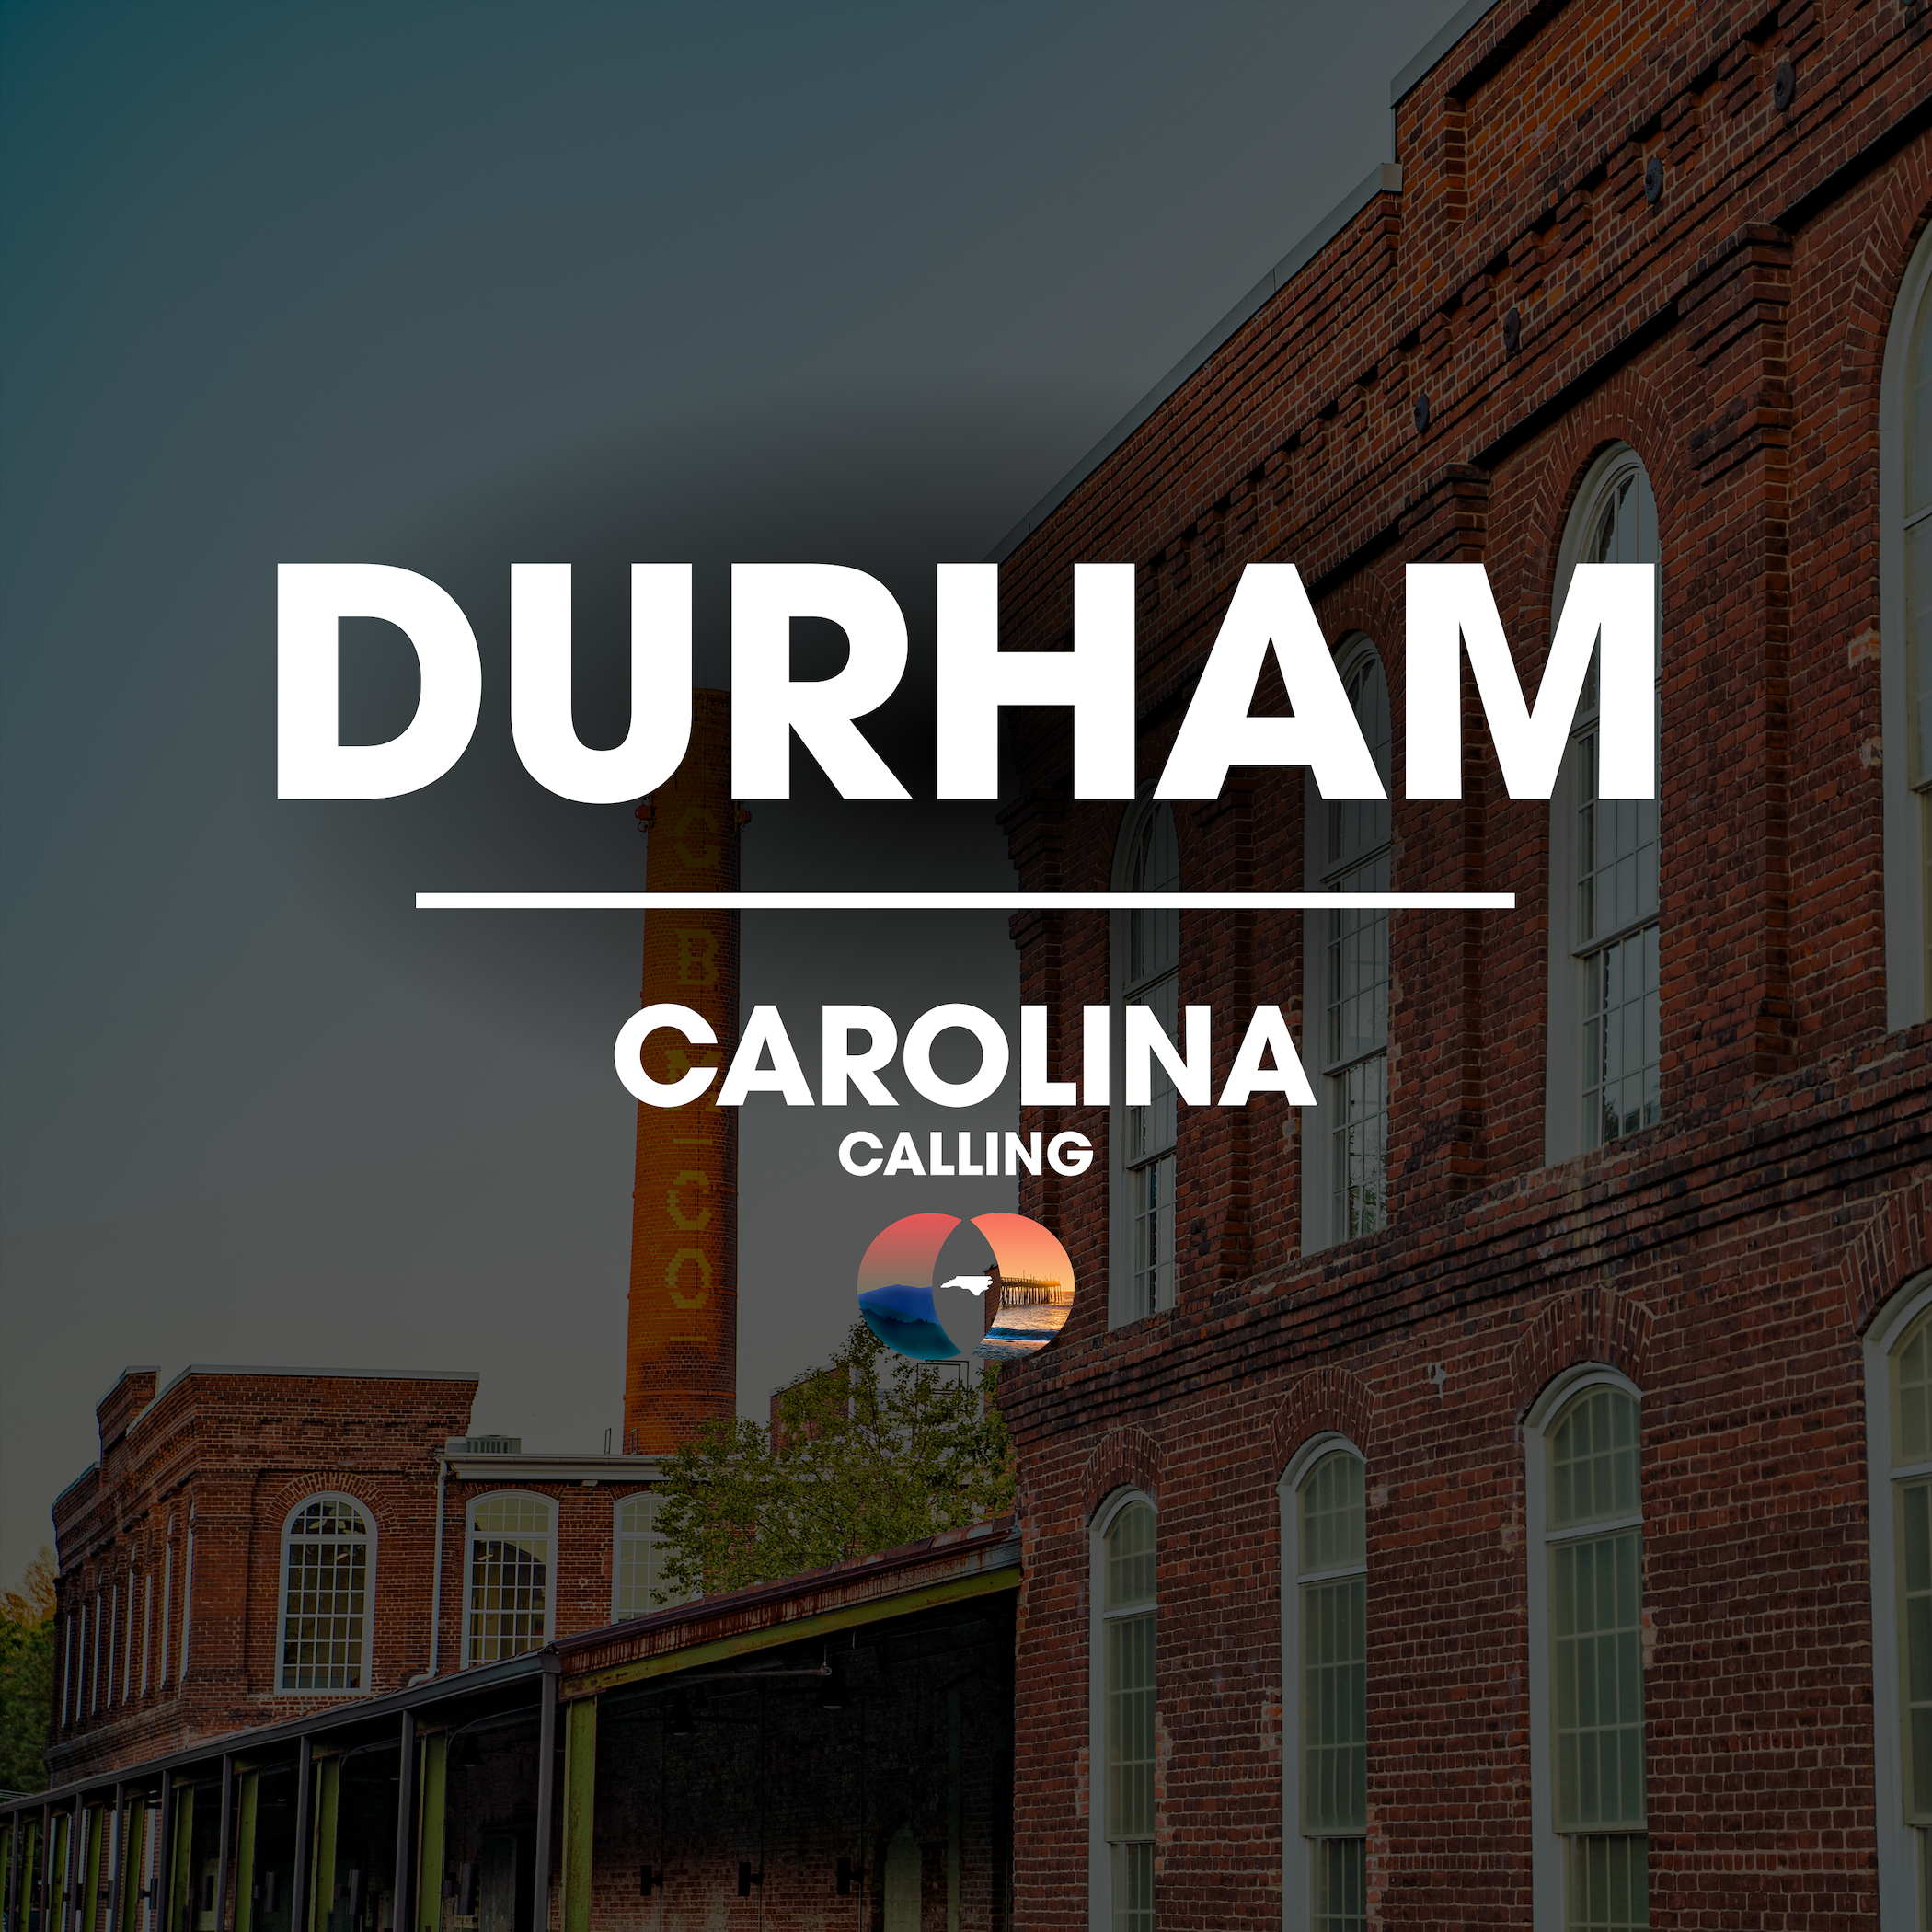 BGS & Come Hear NC Explore the Musical History of North Carolina in New Podcast 'Carolina Calling'